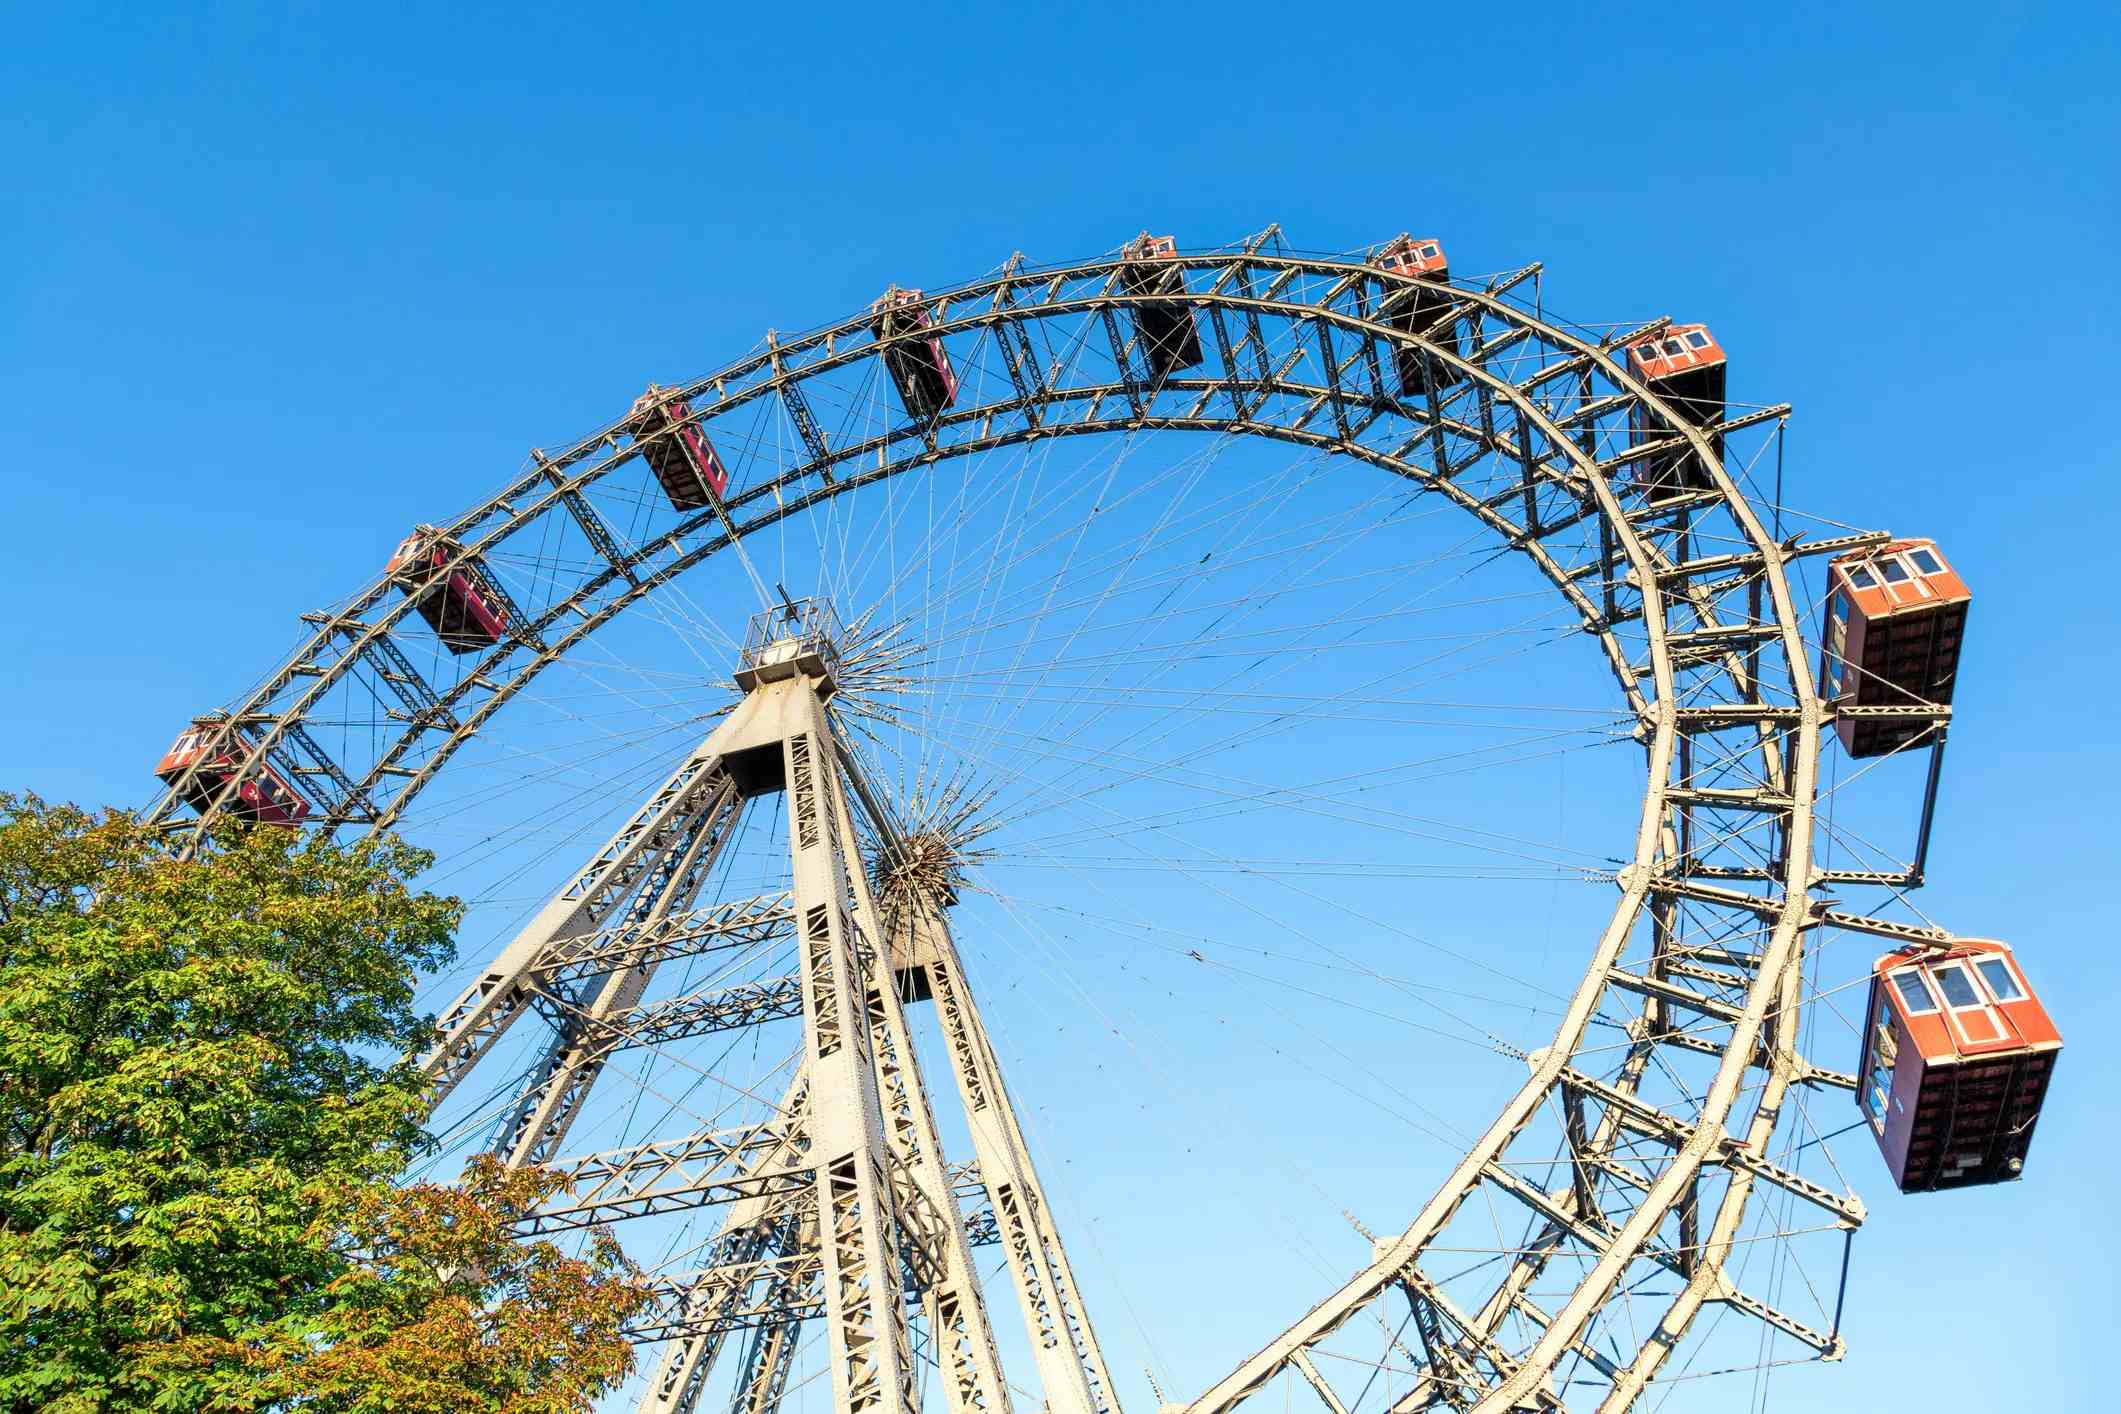 Viennese Giant Ferris Wheel image